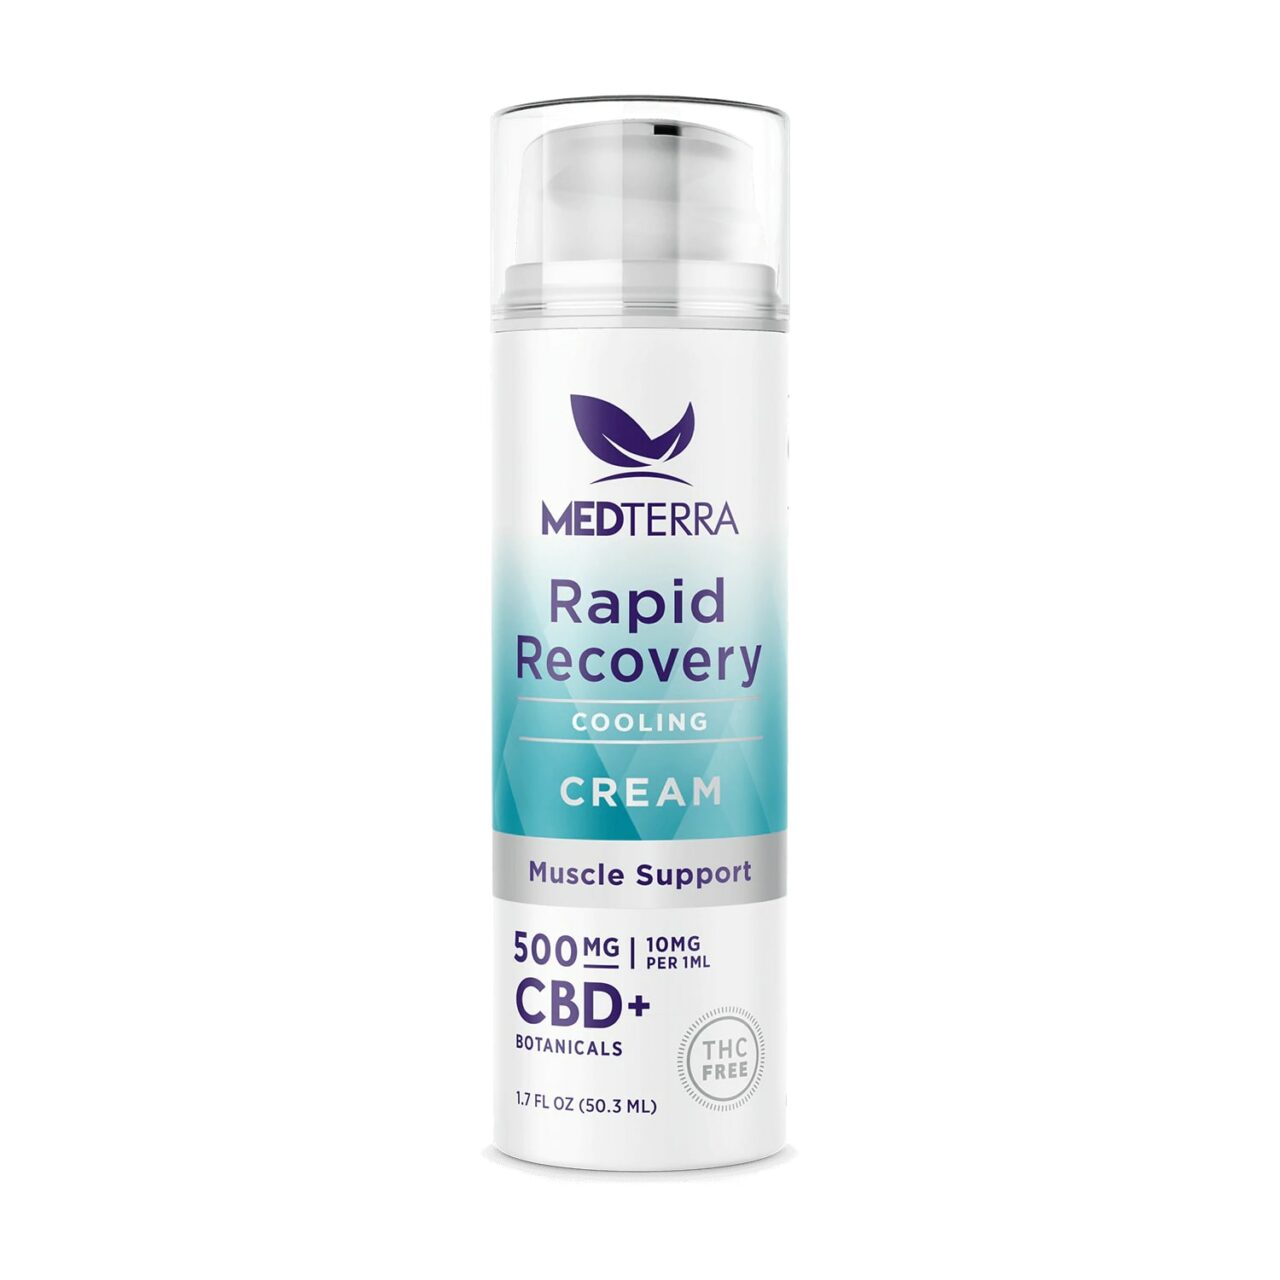 Medterra, Rapid Recovery Cooling CBD Cream, Isolate THC-Free, 1.7oz, 500mg CBD fixed